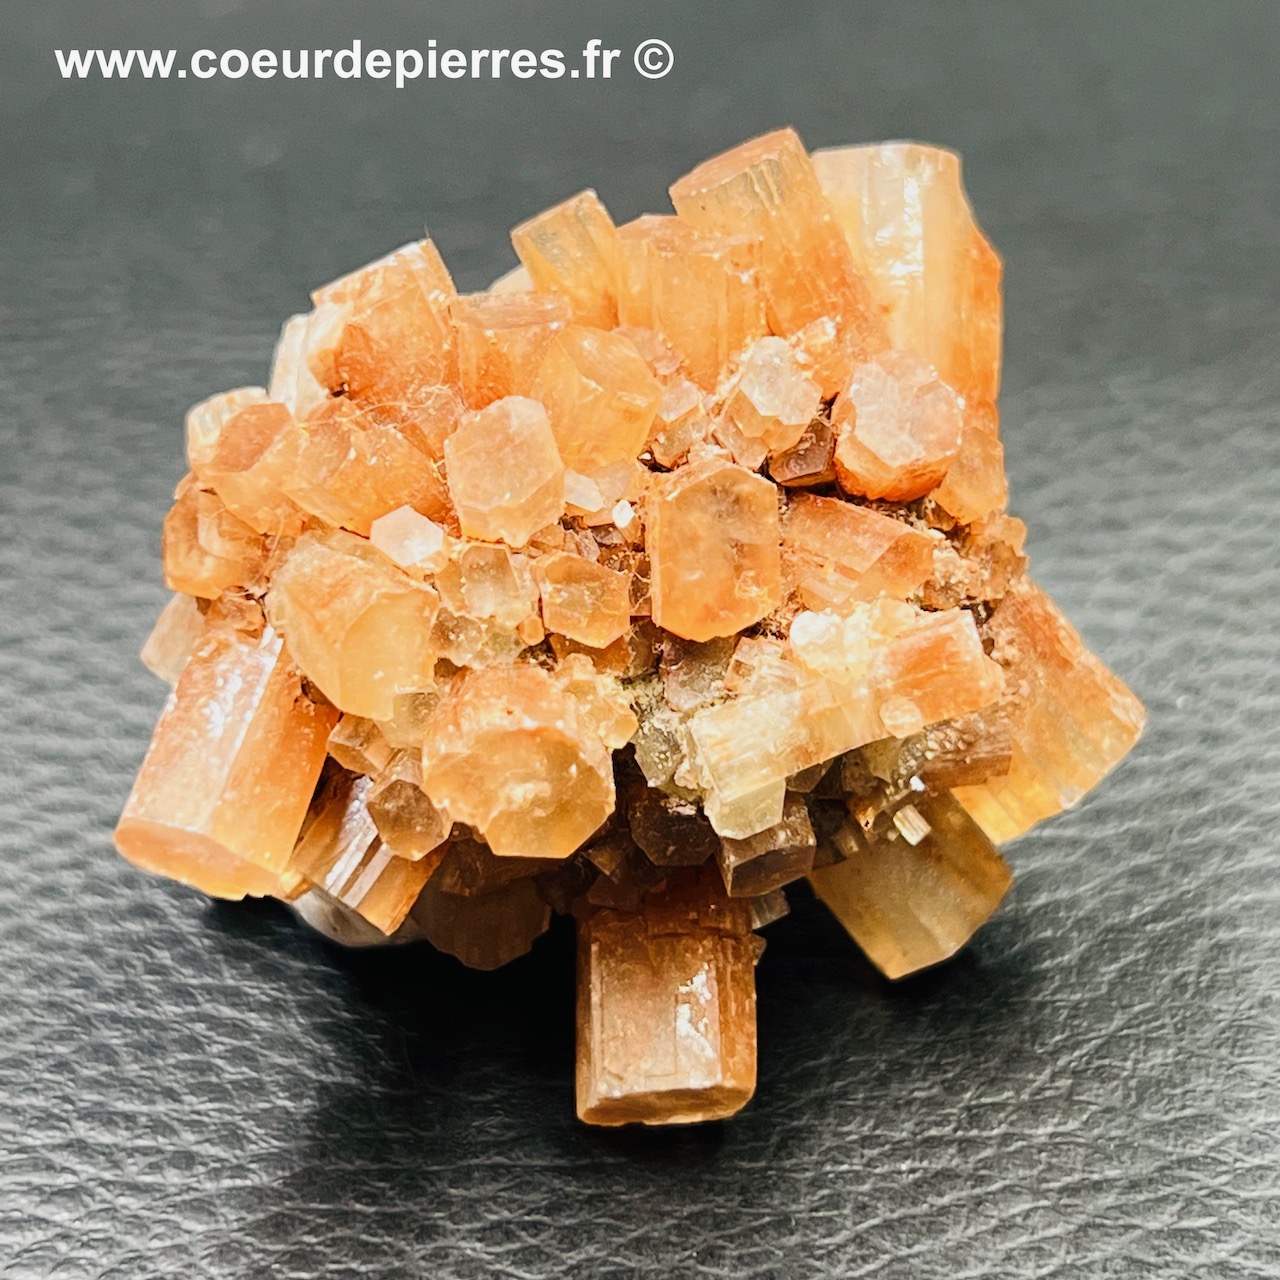 Aragonite cristal brut du Maroc (réf ago3)